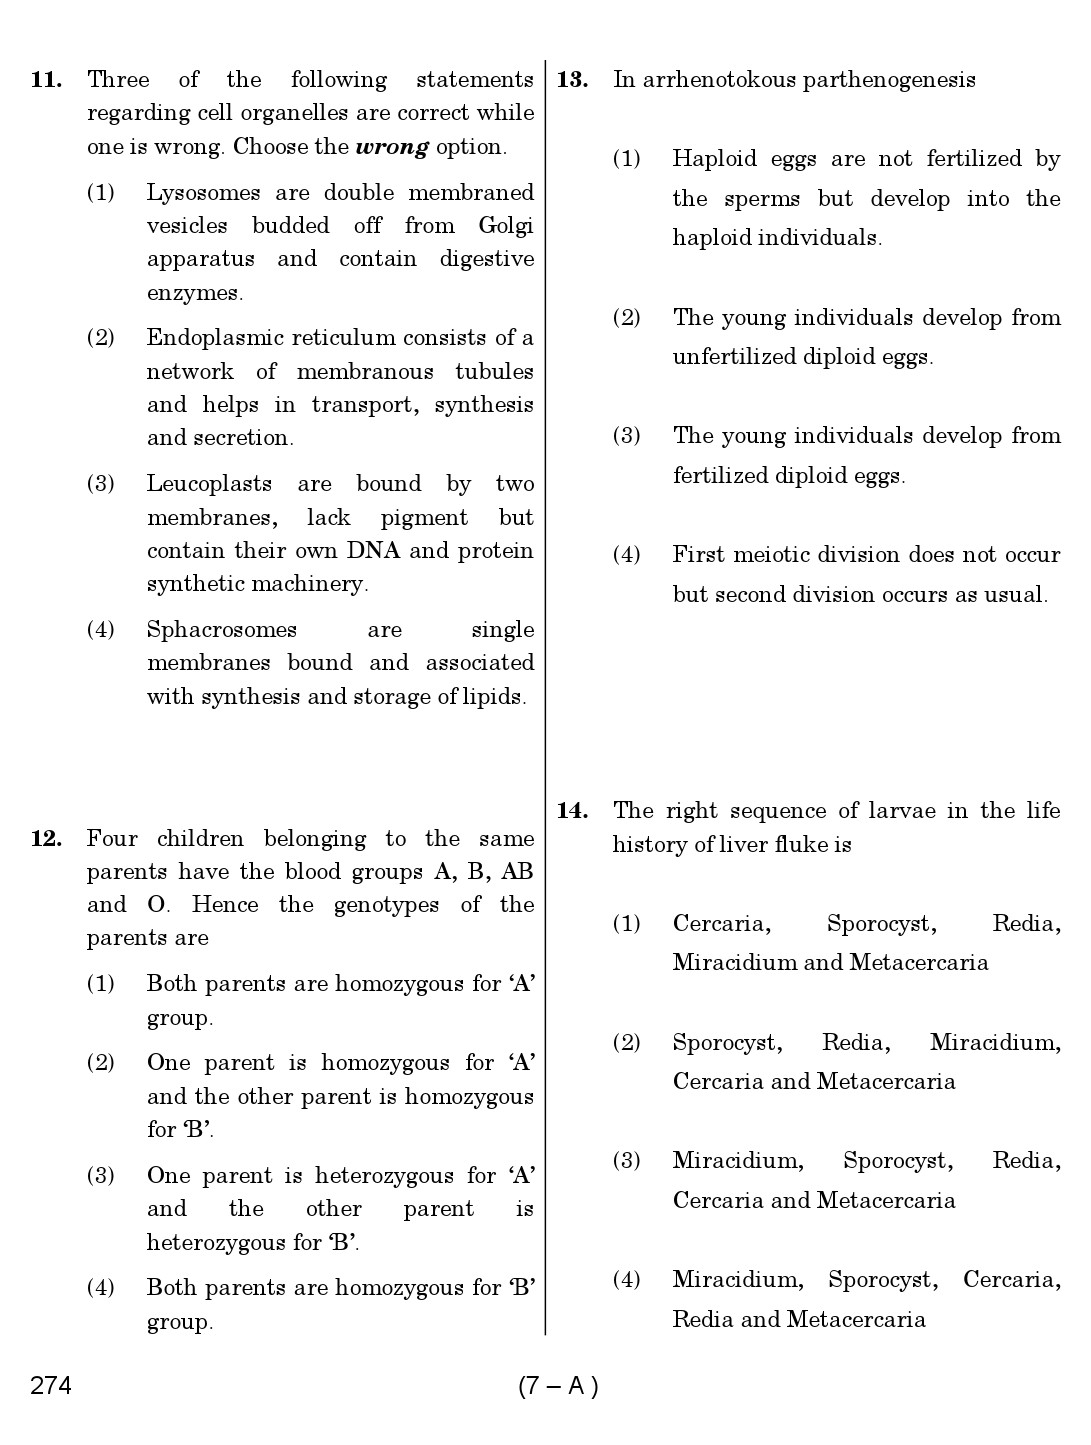 Karnataka PSC Science Teacher Exam Sample Question Paper Subject code 274 7